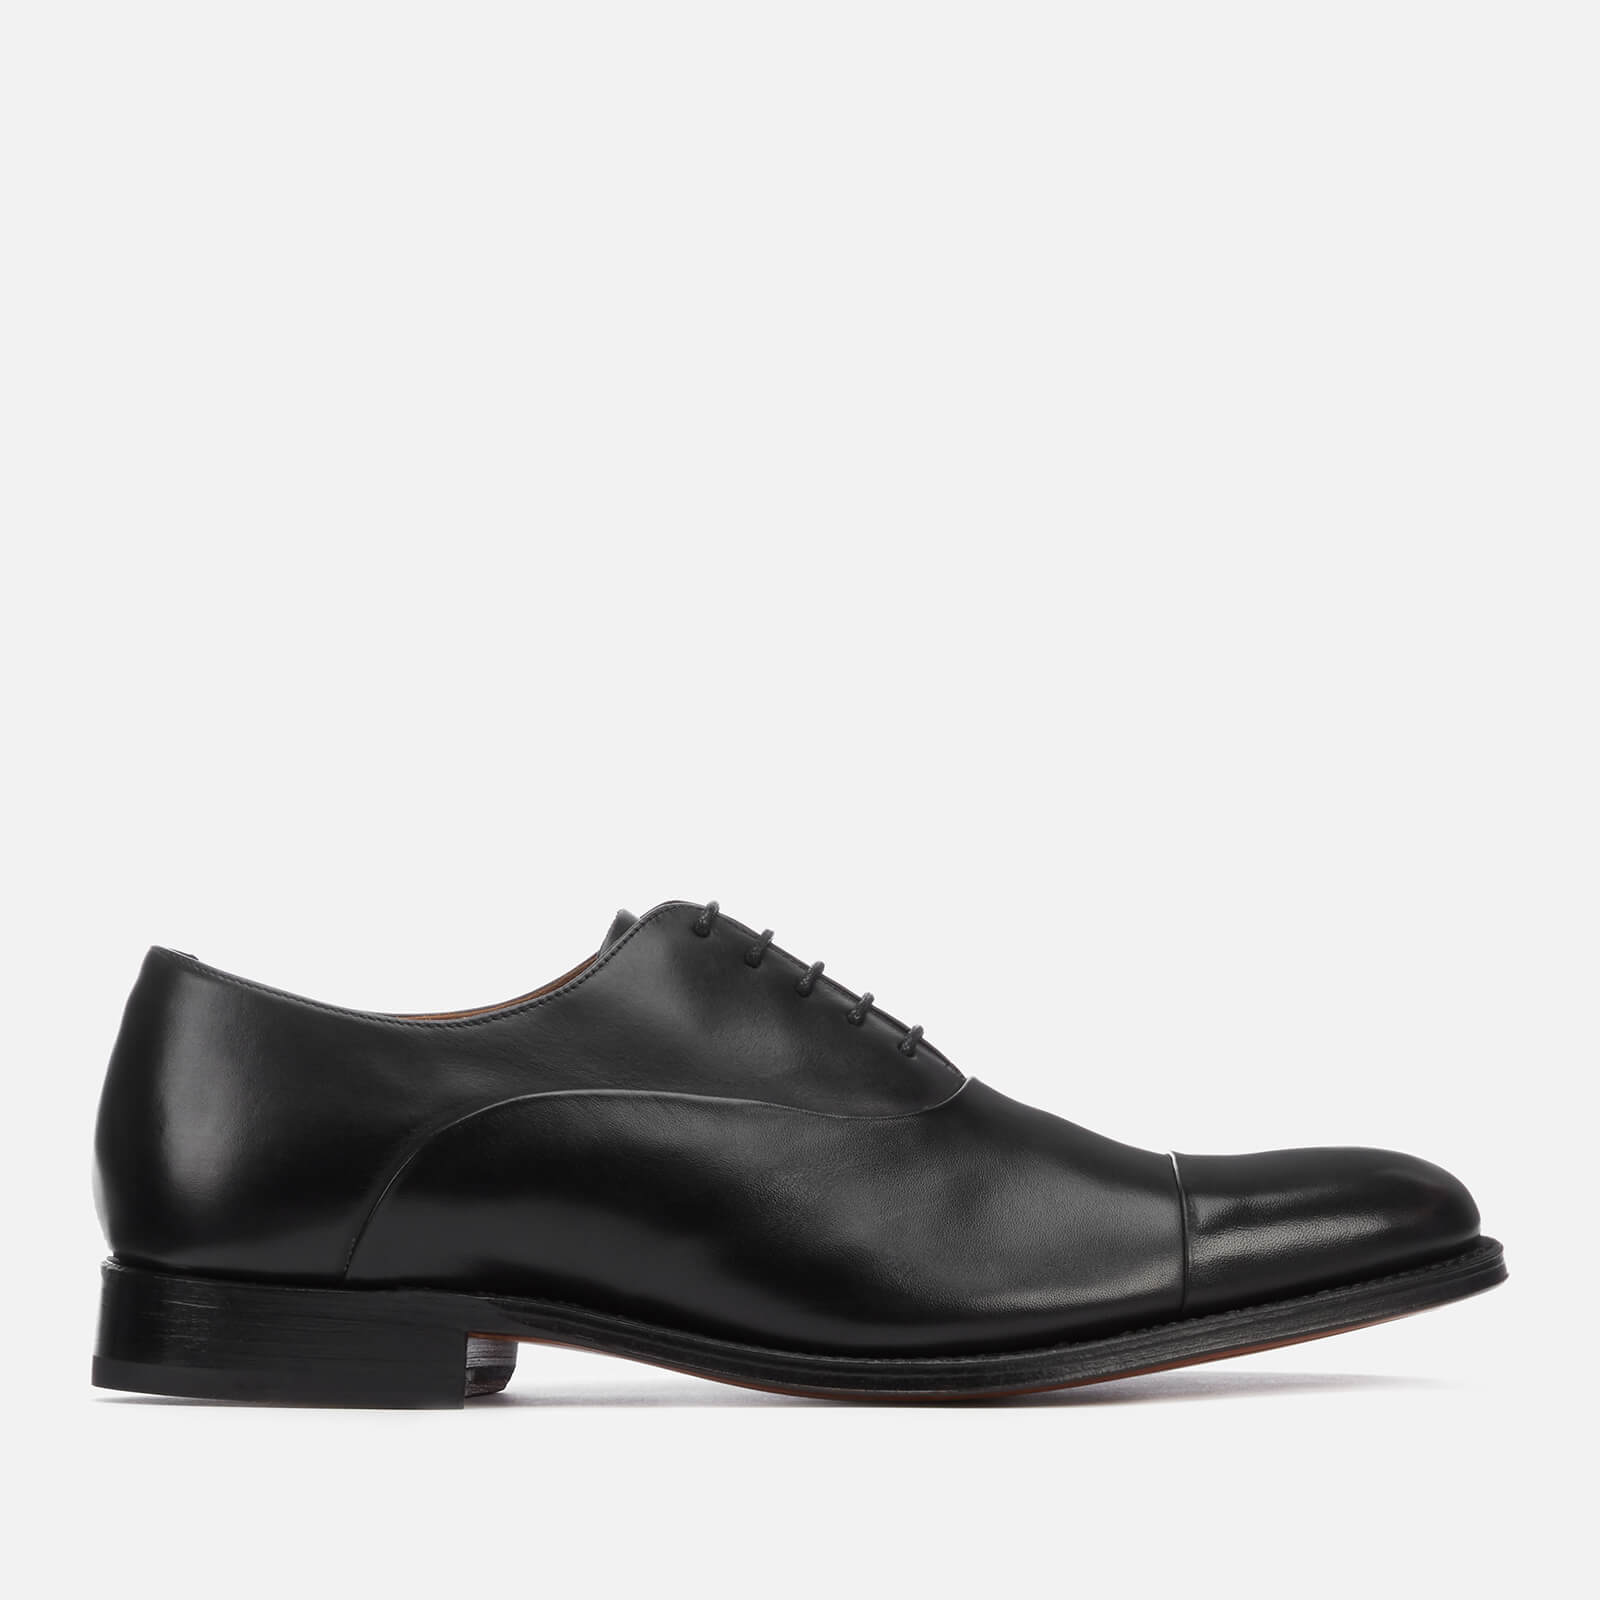 Grenson Men's Bert Leather Toe Cap Oxford Shoes - Black - UK 7 - Black